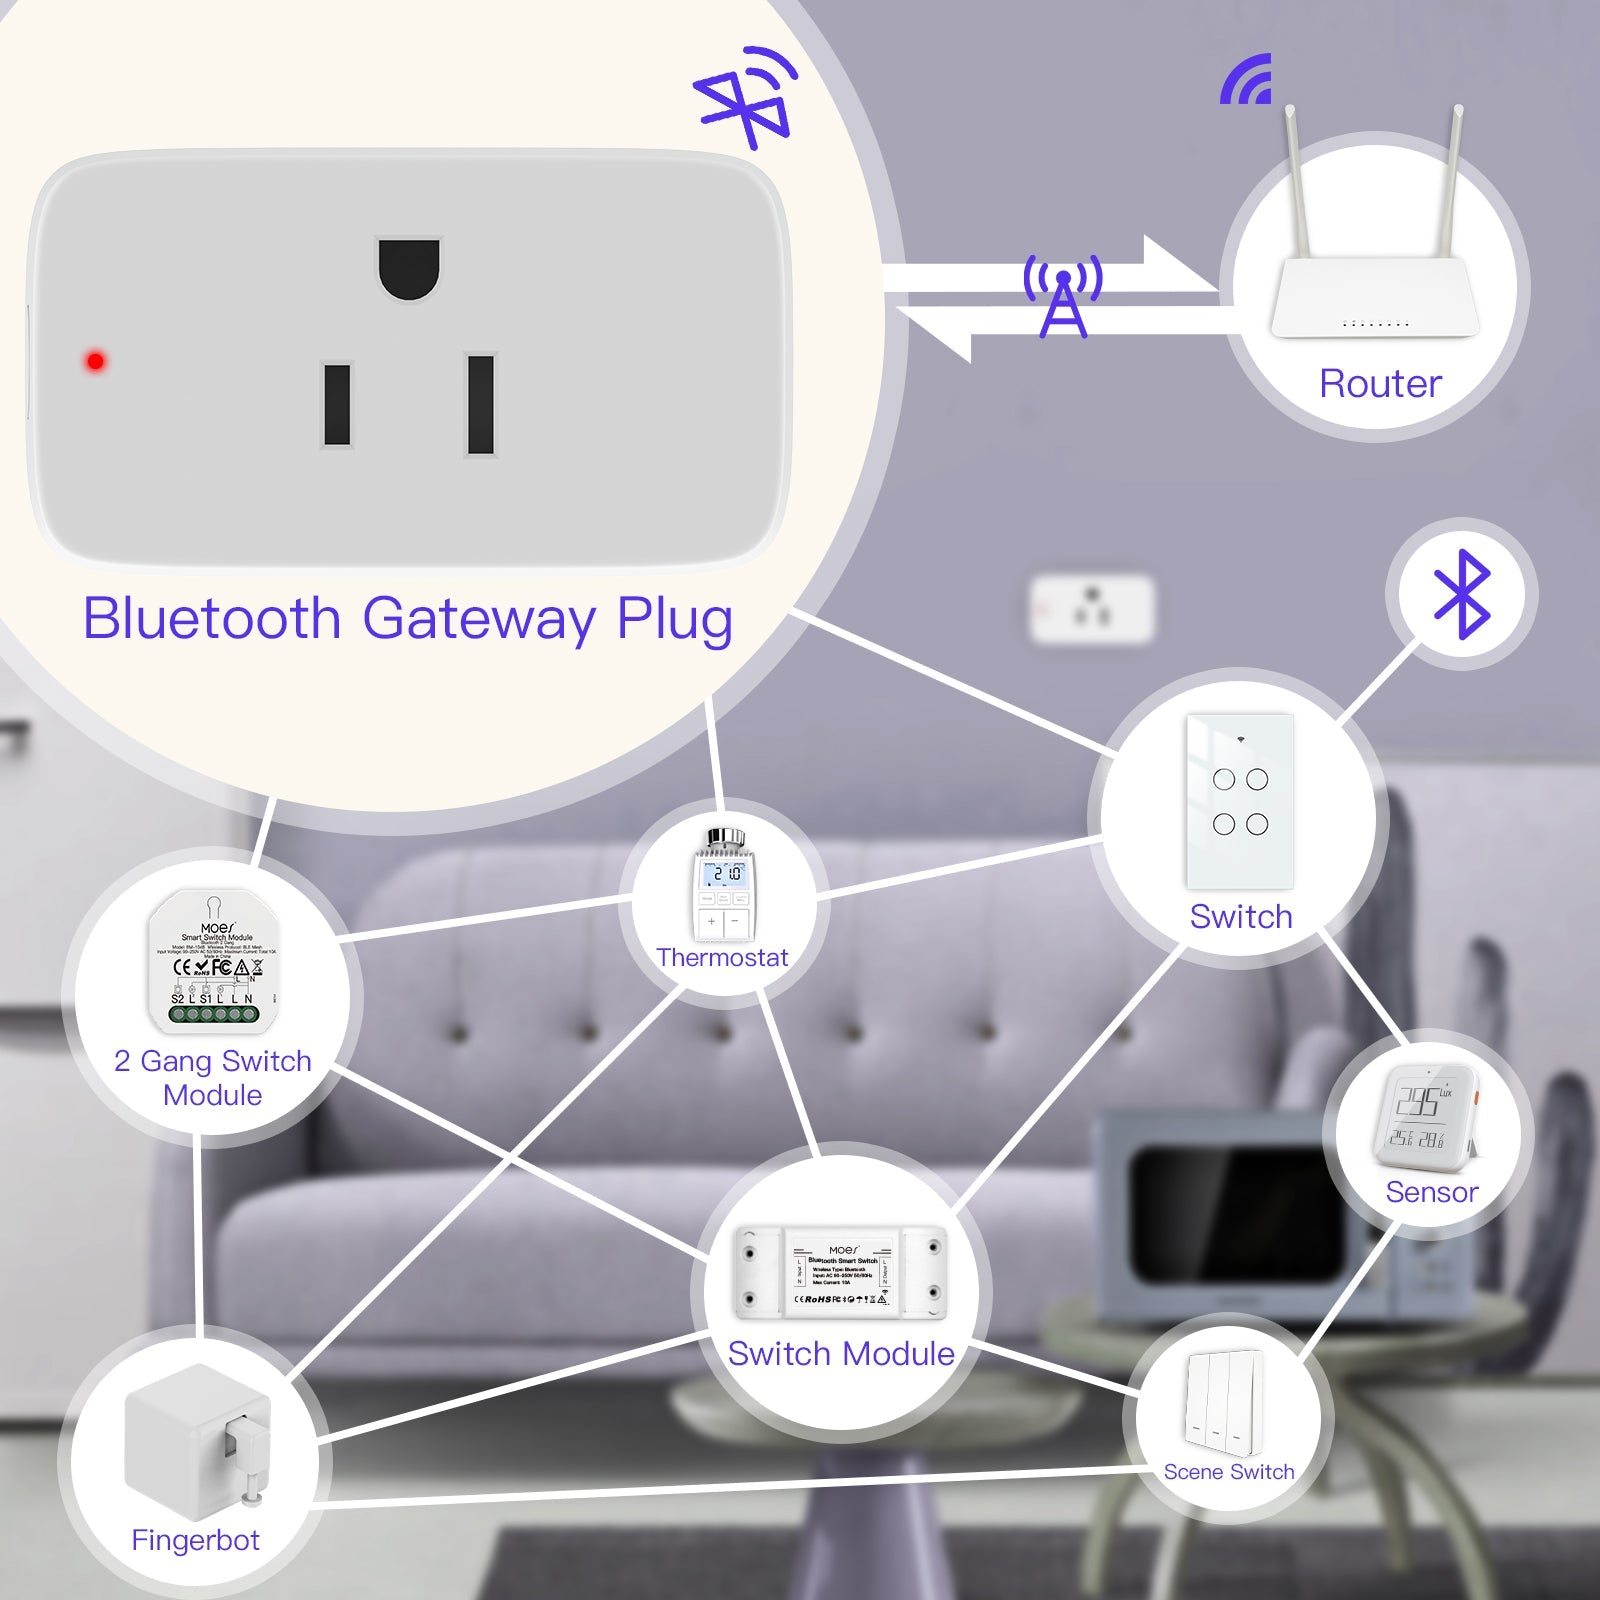 Bluetooth Smart Outlet - Revogi - Touch of Modern